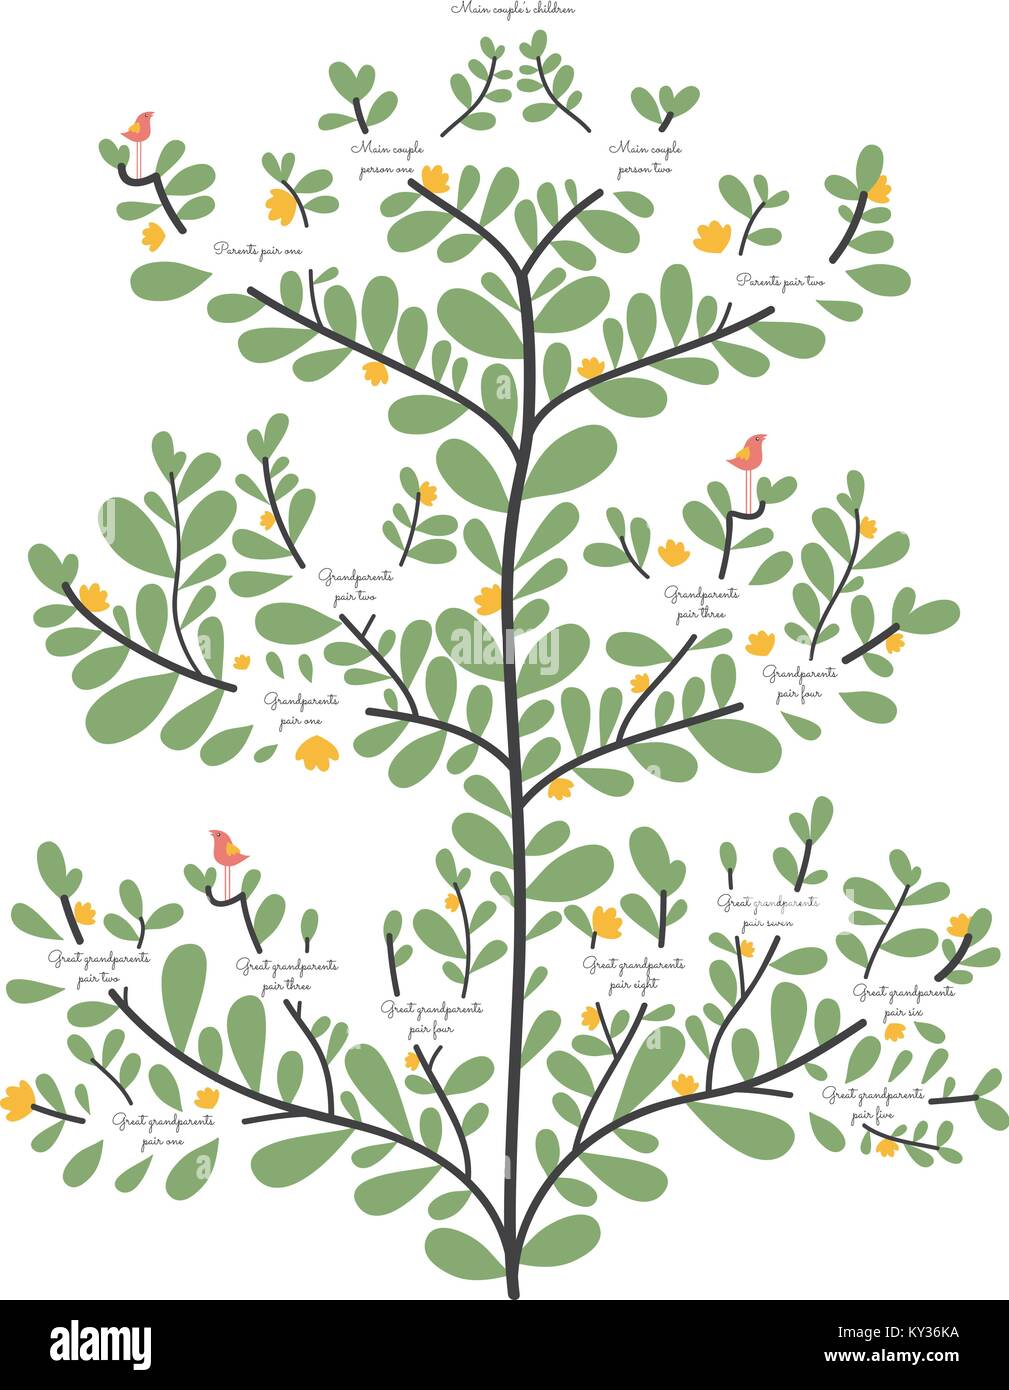 Family tree, ancestry line elegant organic illustrated vector template Stock Vector